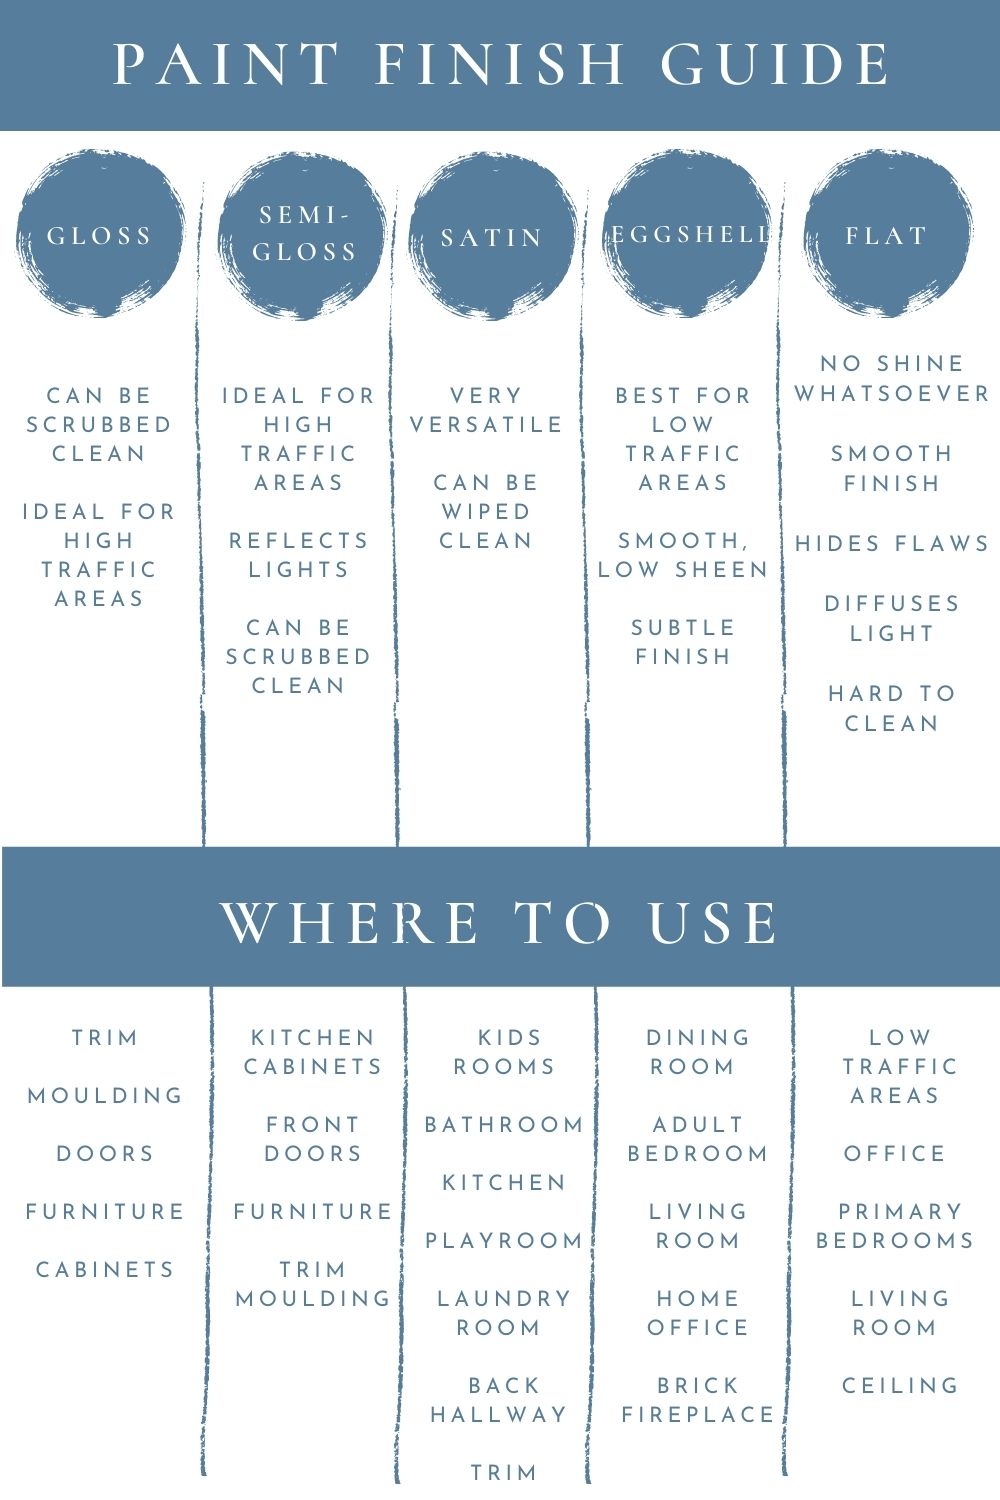 Paint finish guide chart